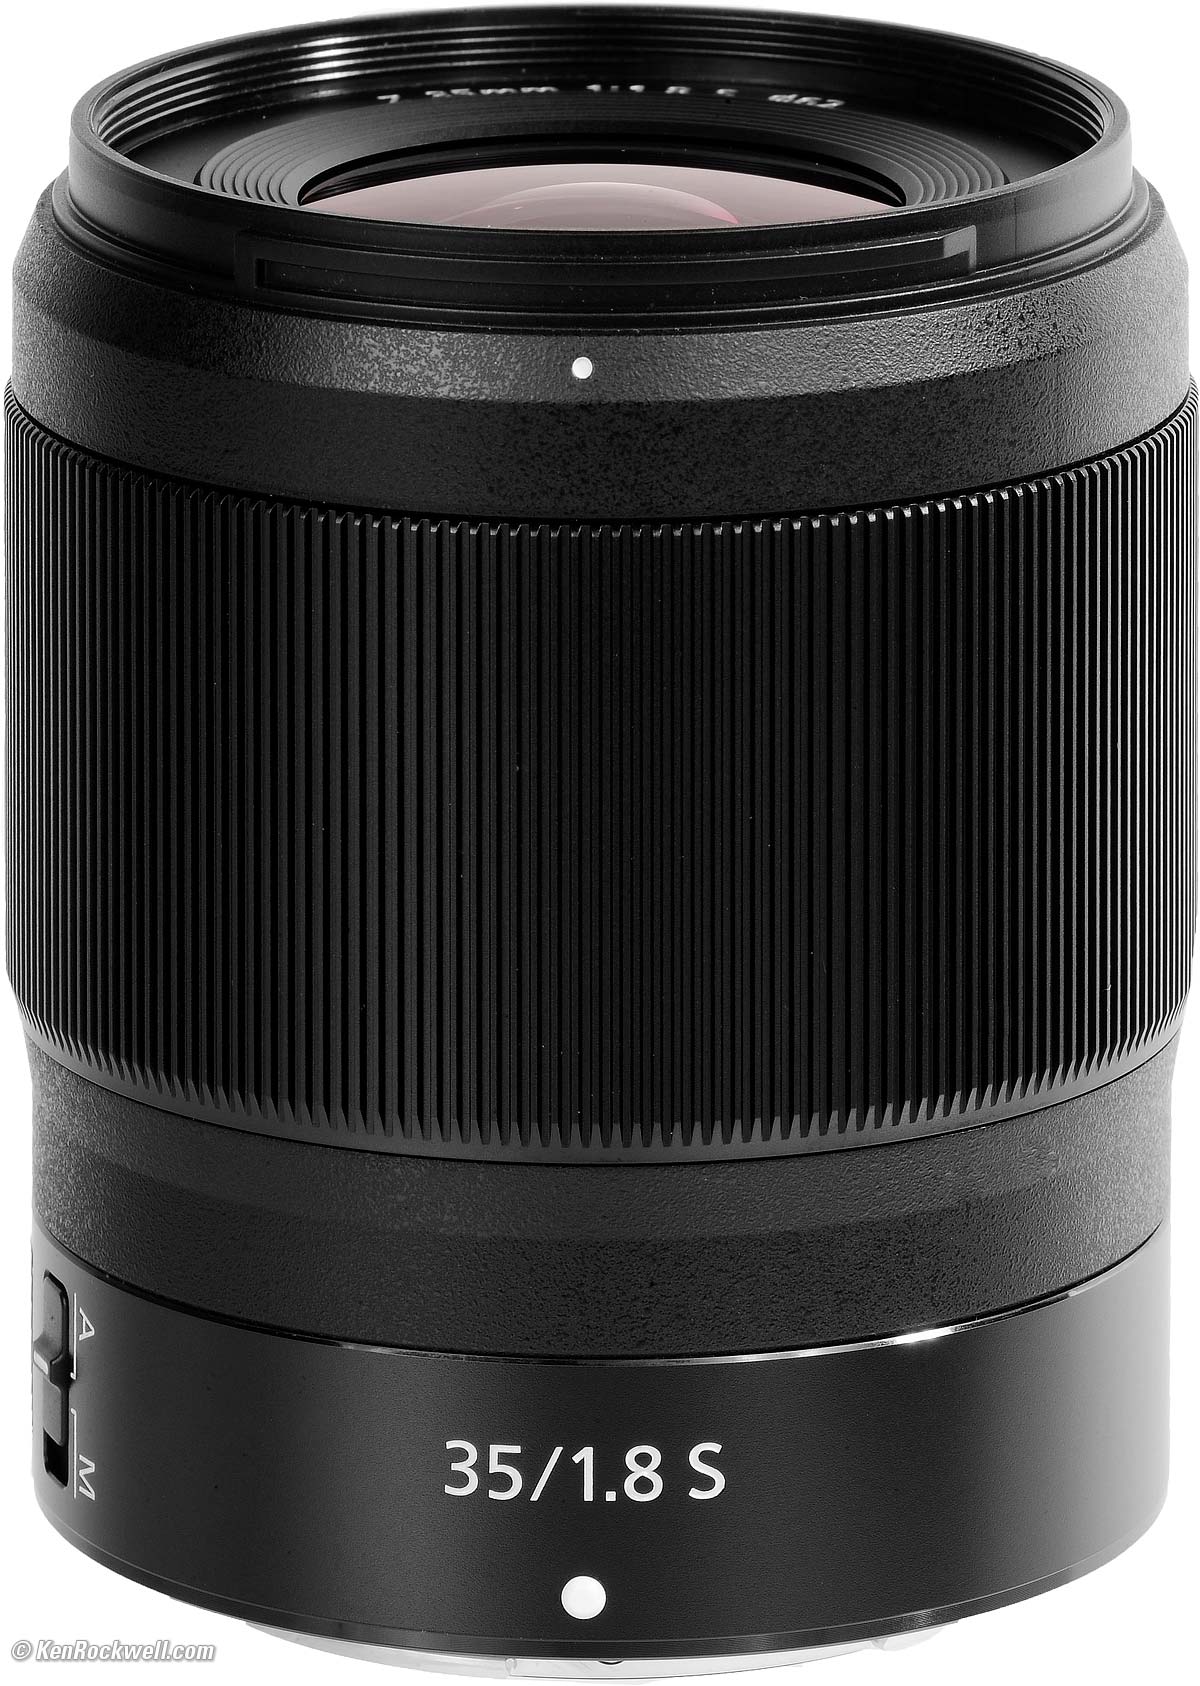 Camera Replacement Lens Hood Shade for Nikon Camera AF-S 35/1.8G DX Lens